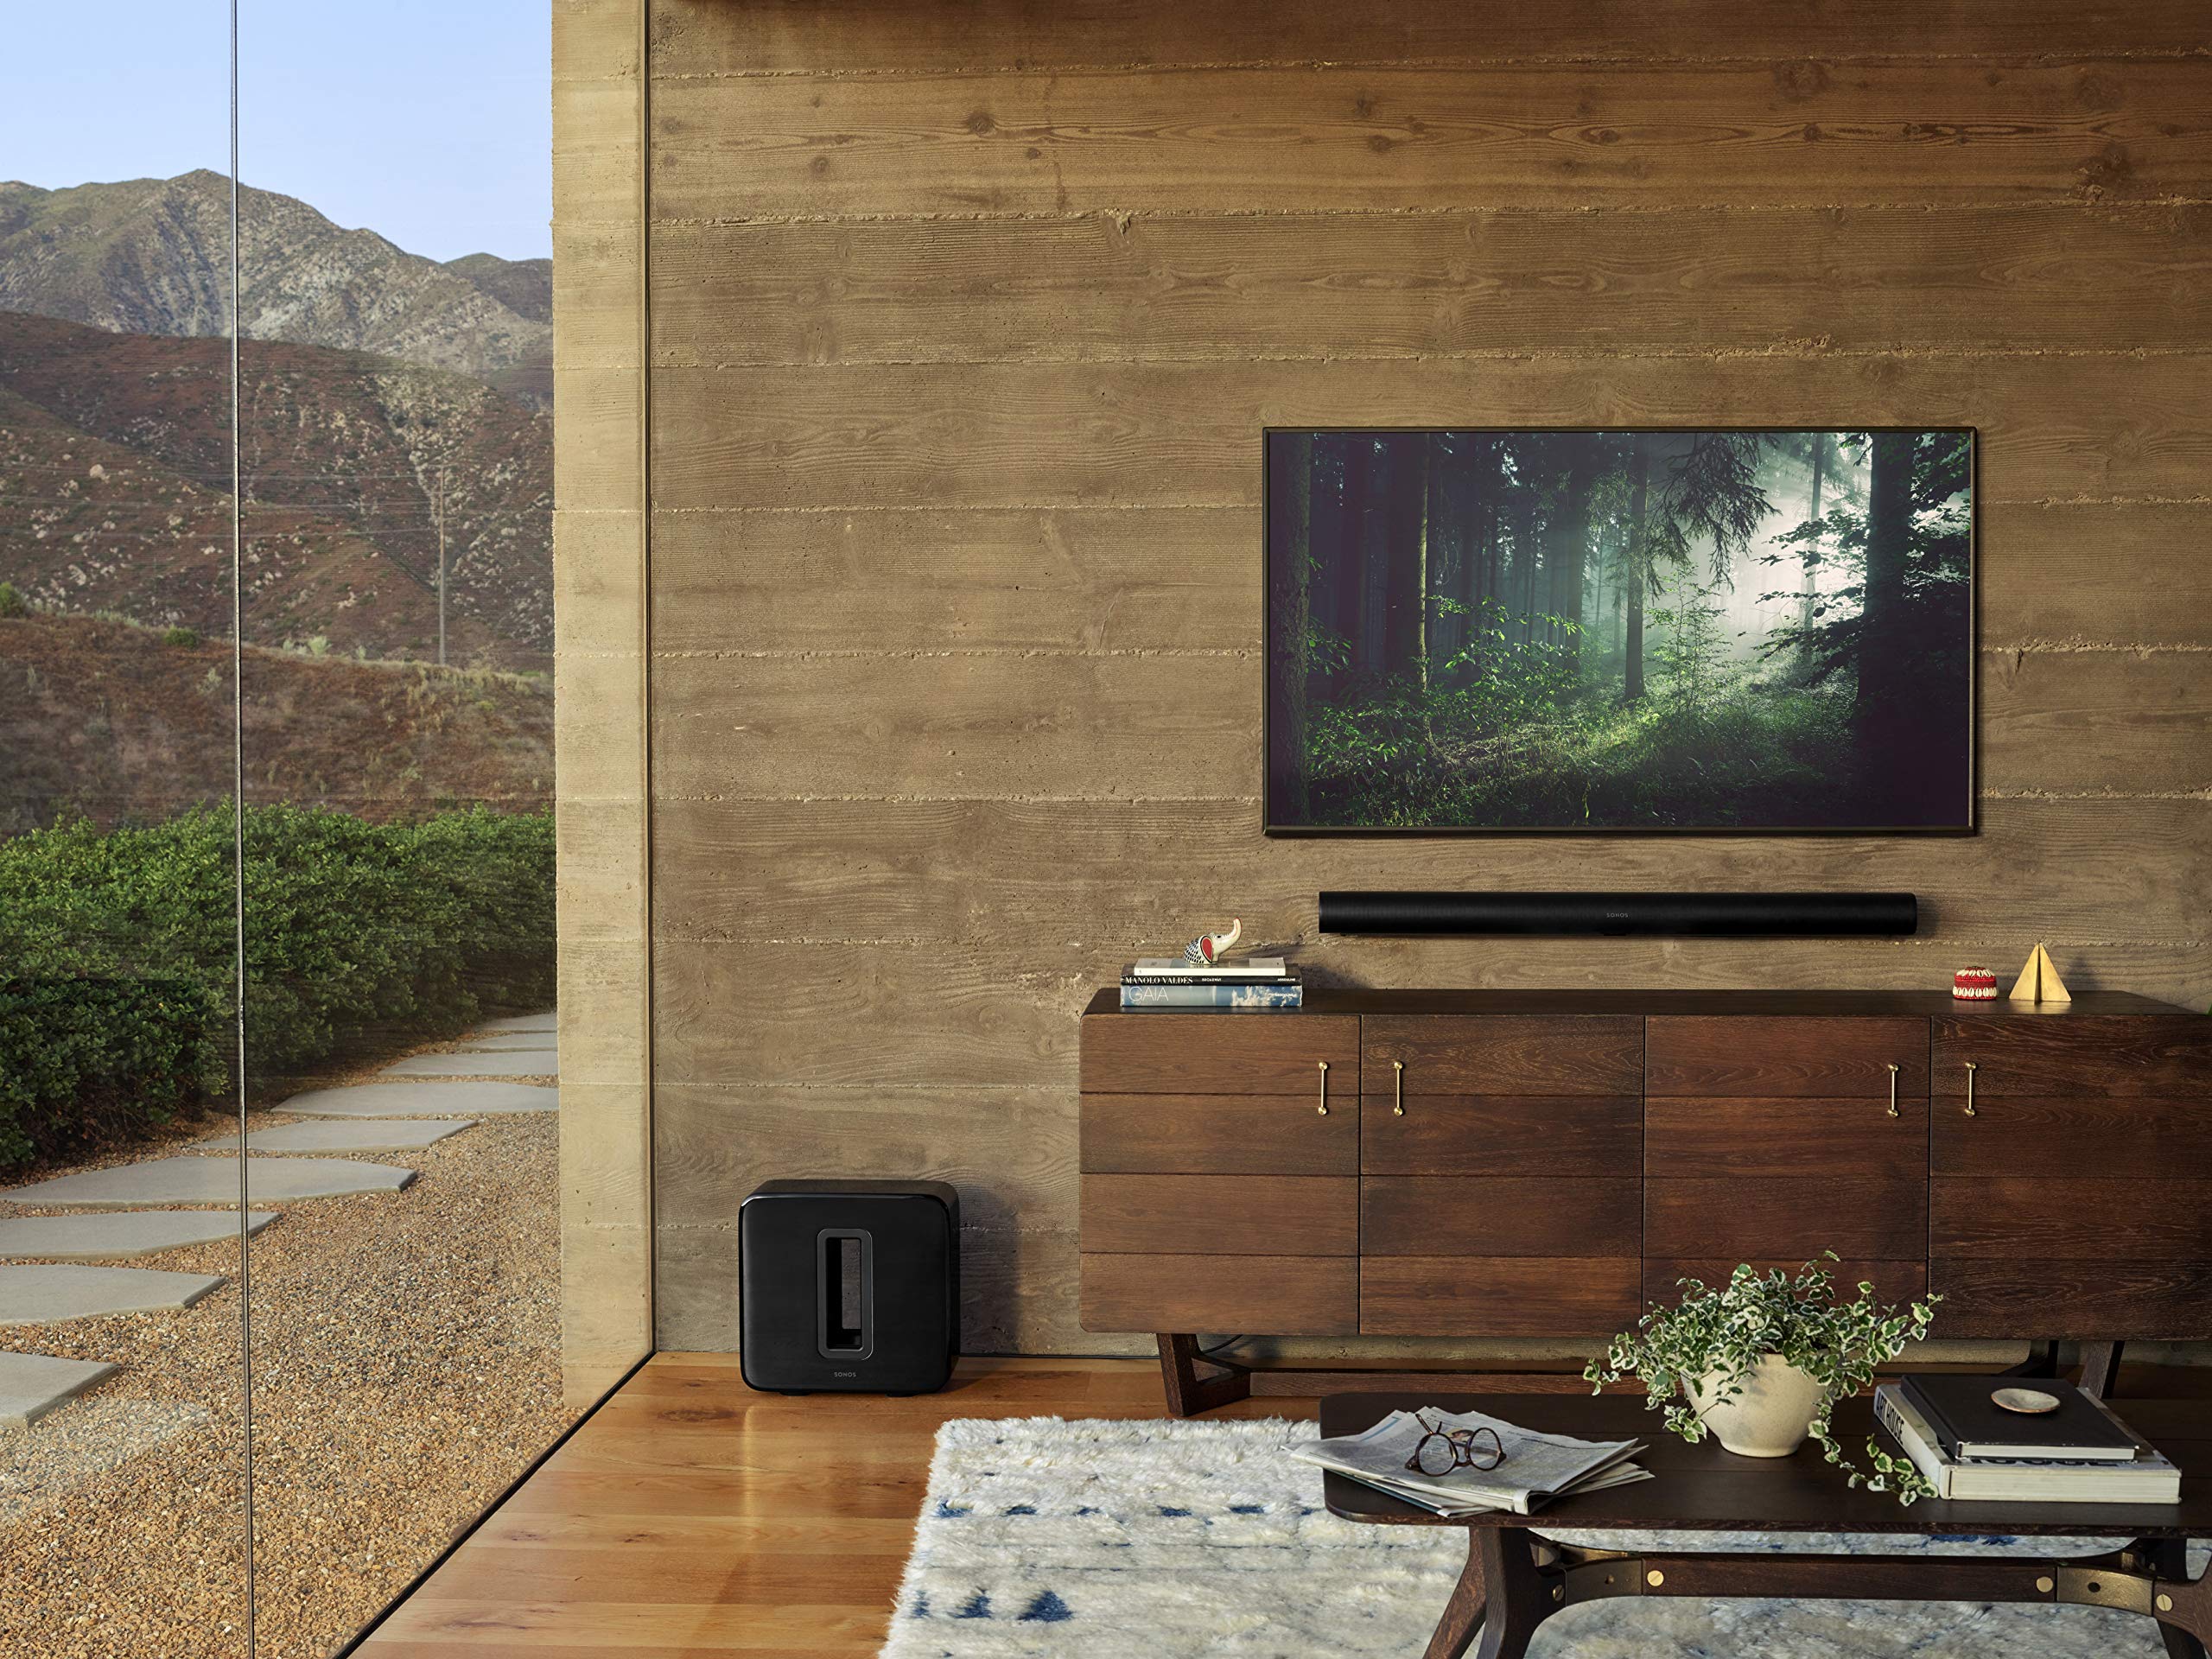 Sonos Arc - The Premium Smart Soundbar for TV, Movies, Music, Gaming, and More - Black …